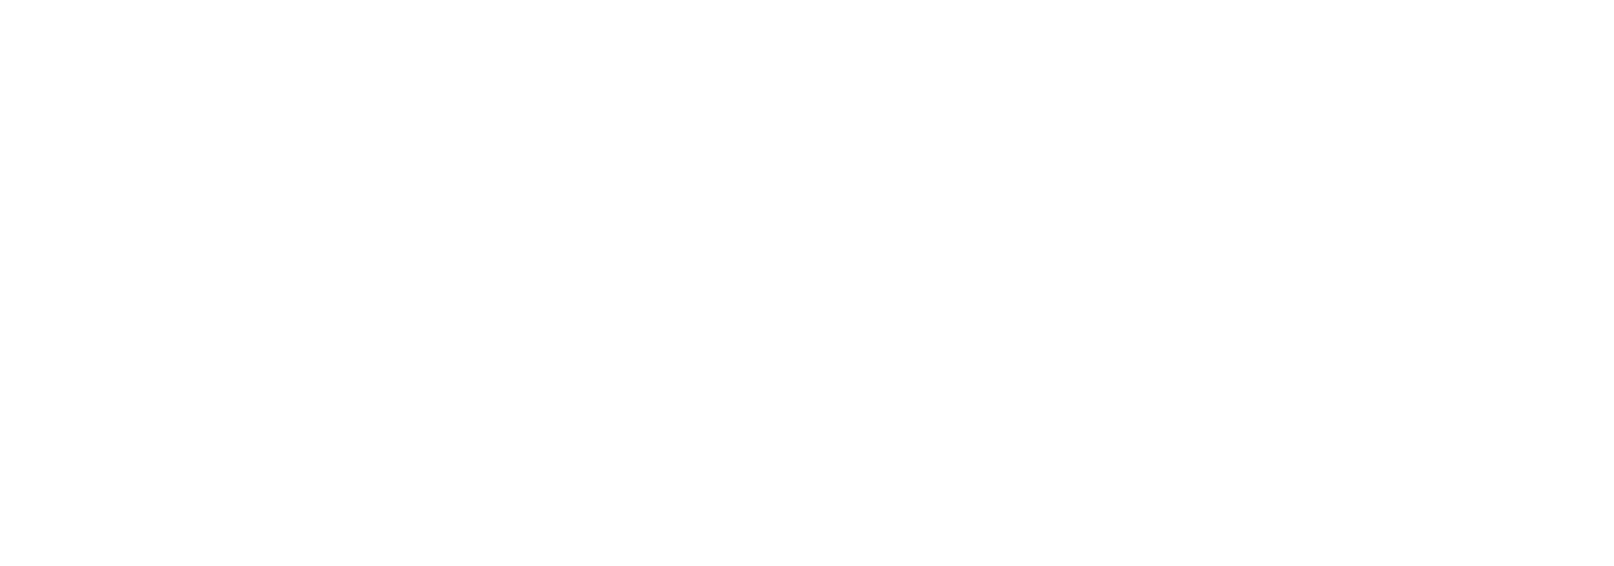 West Midlands Metro logo